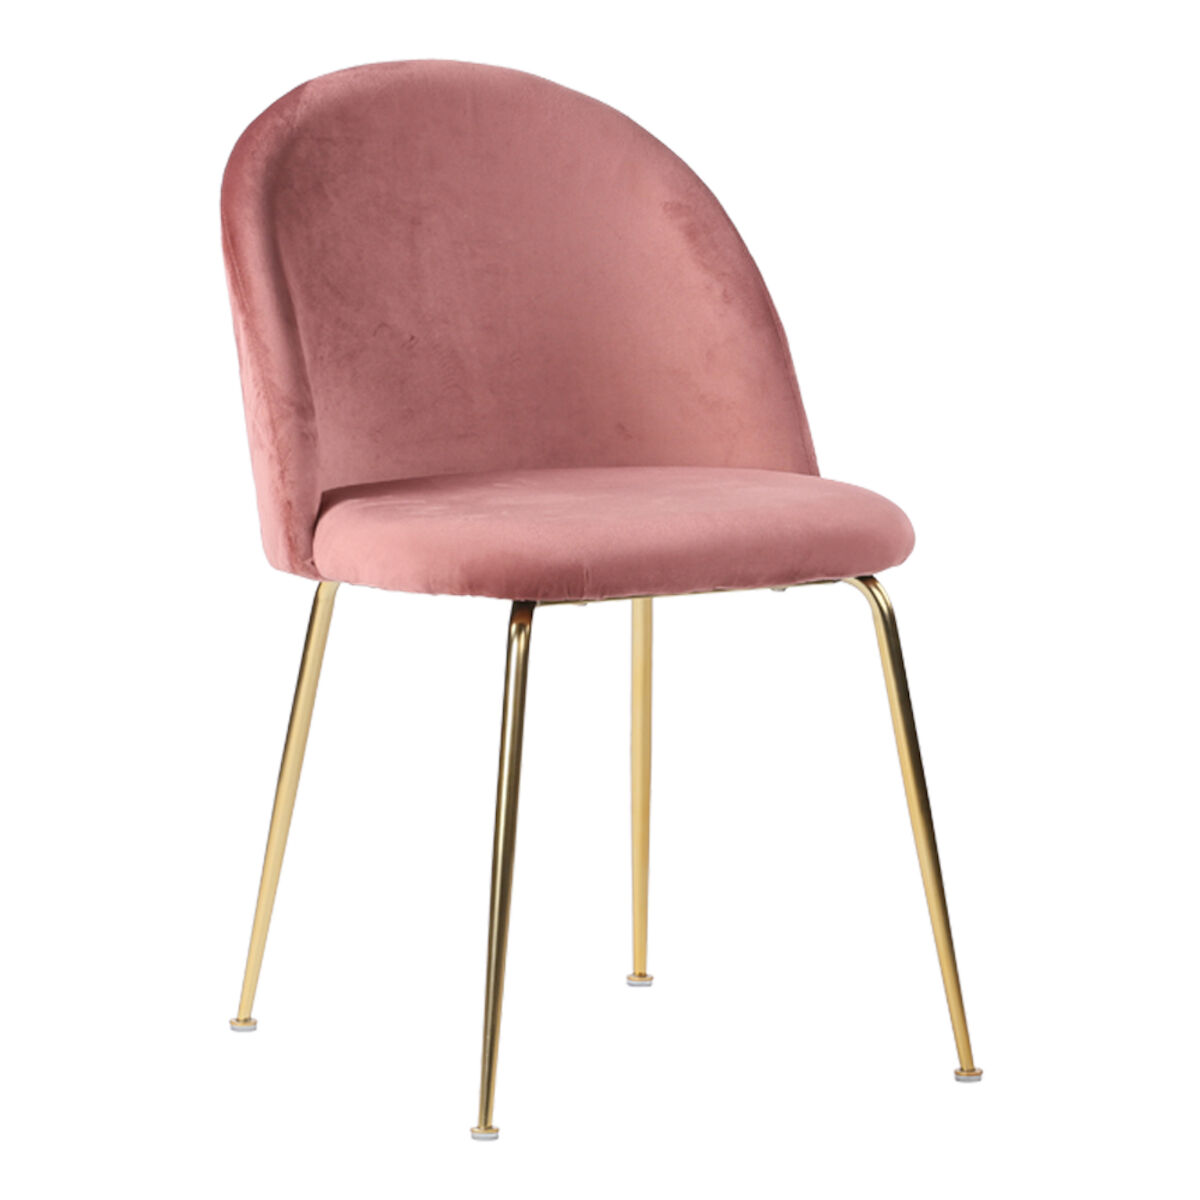 House Nordic Geneve tuoli roosa sametti messinki jalat